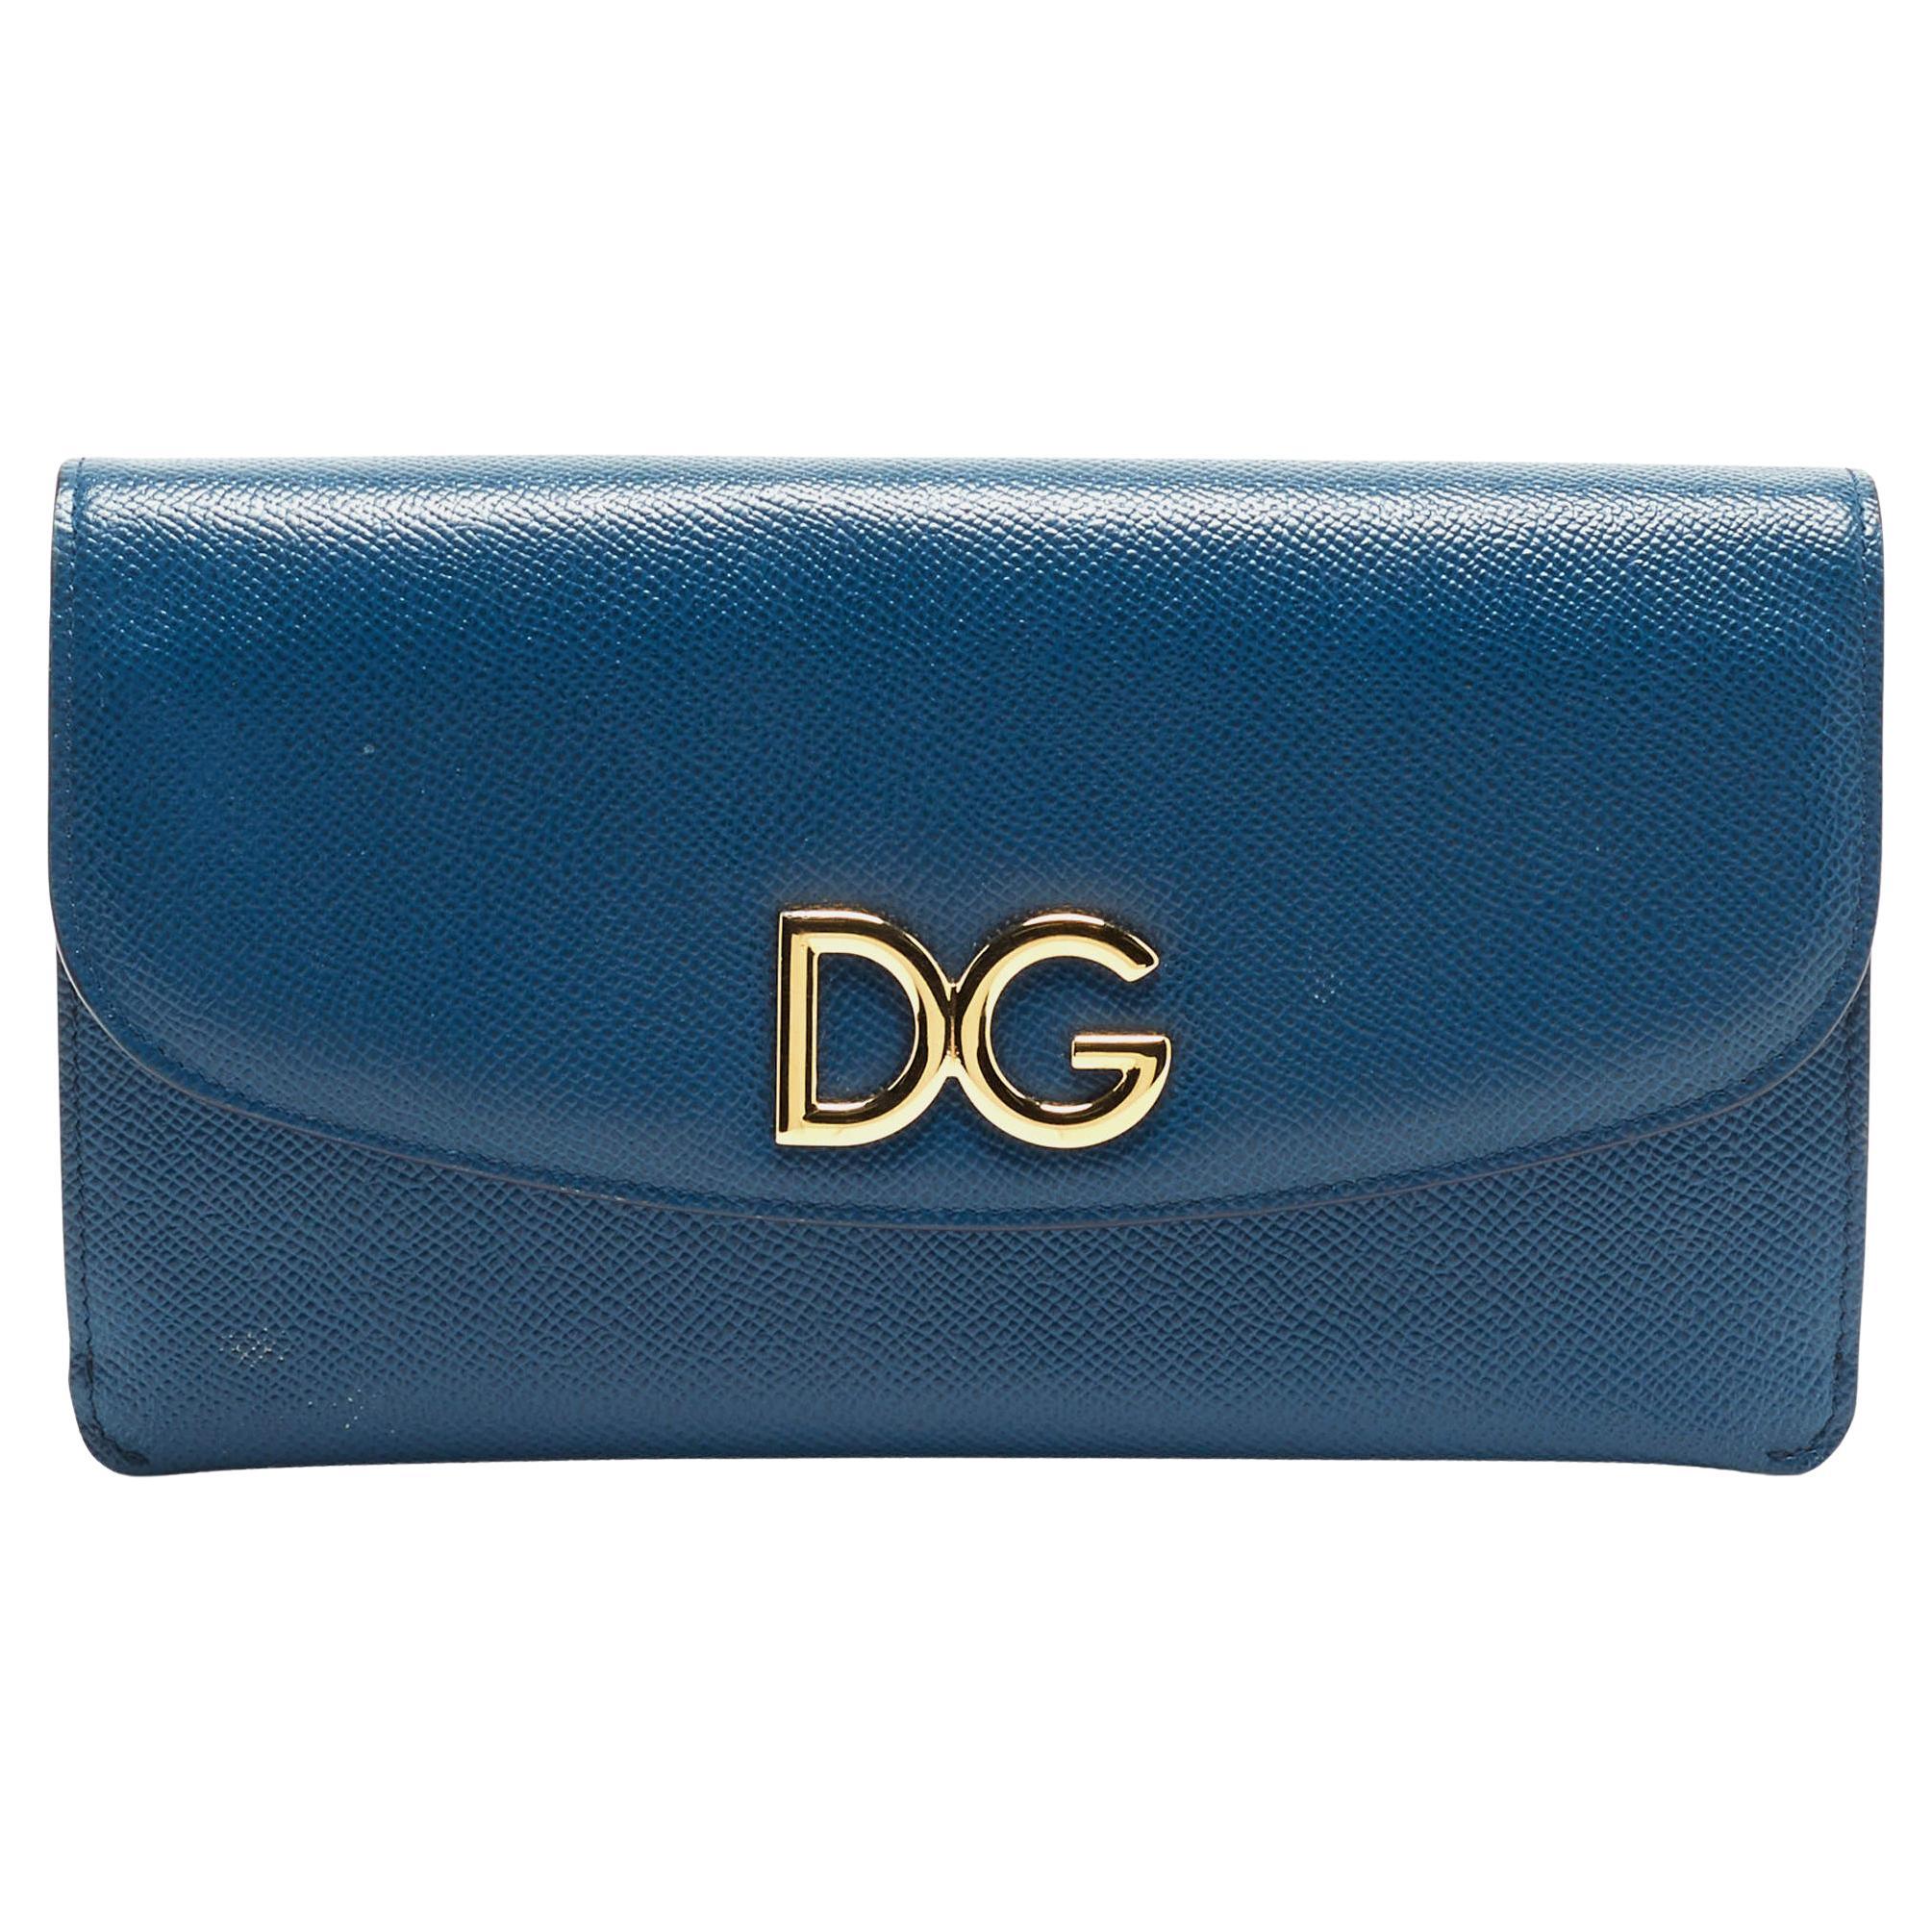 Dolce & Gabbana Blue Grained Leather DG Logo Flap Chain Clutch